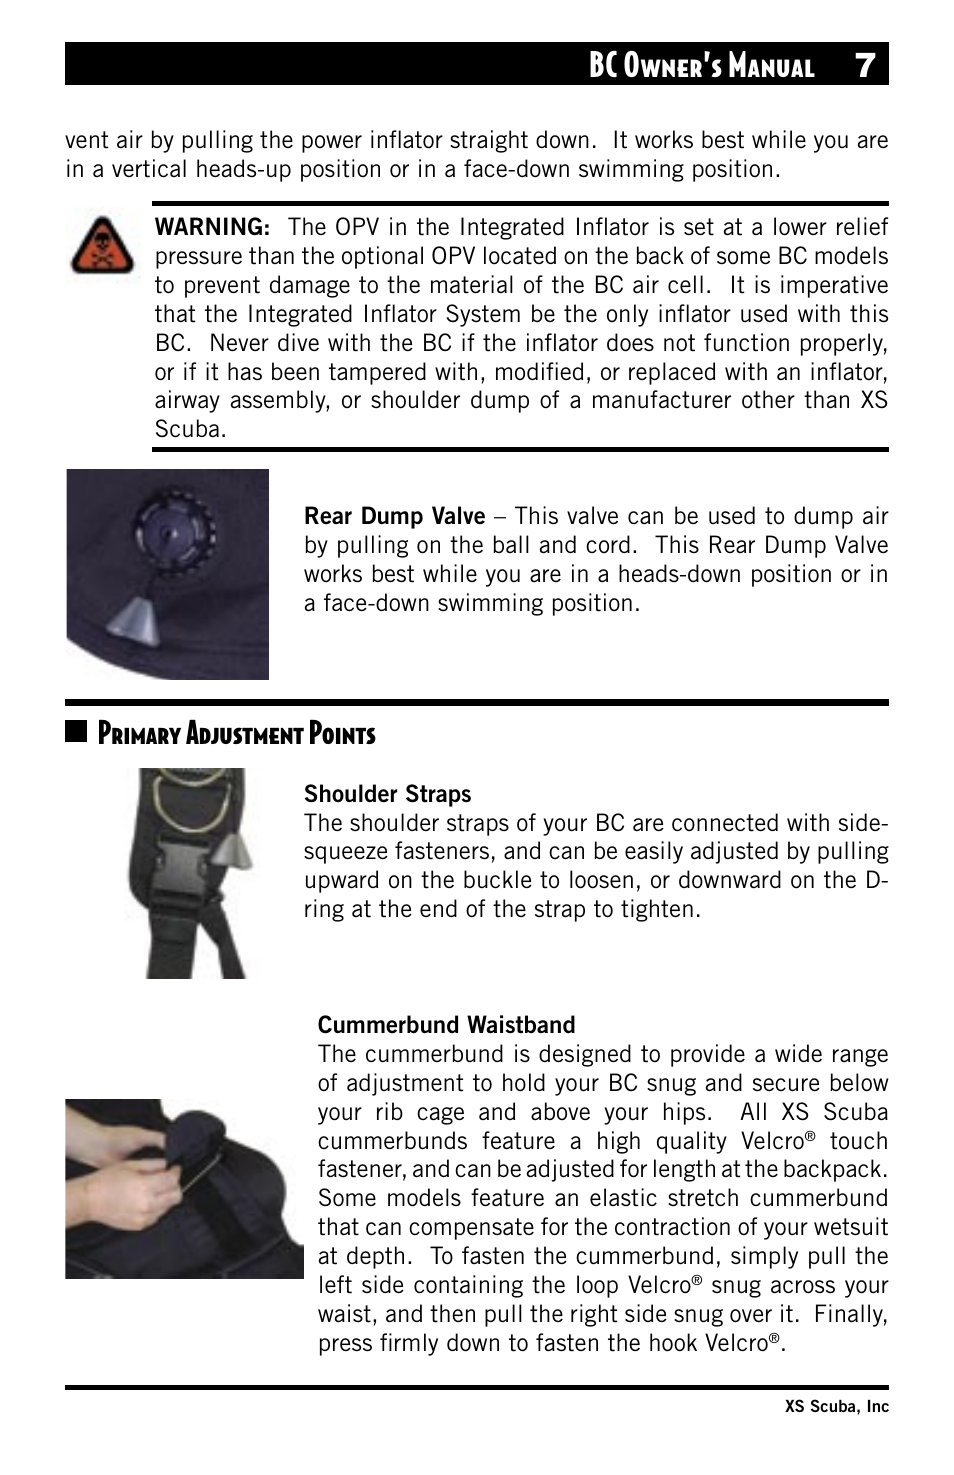 Primary adjustment points, Shoulder straps, Cummerbund waistband | Bc owner’s manual 7 | XS Scuba Buoyancy Compensator User Manual | Page 7 / 24